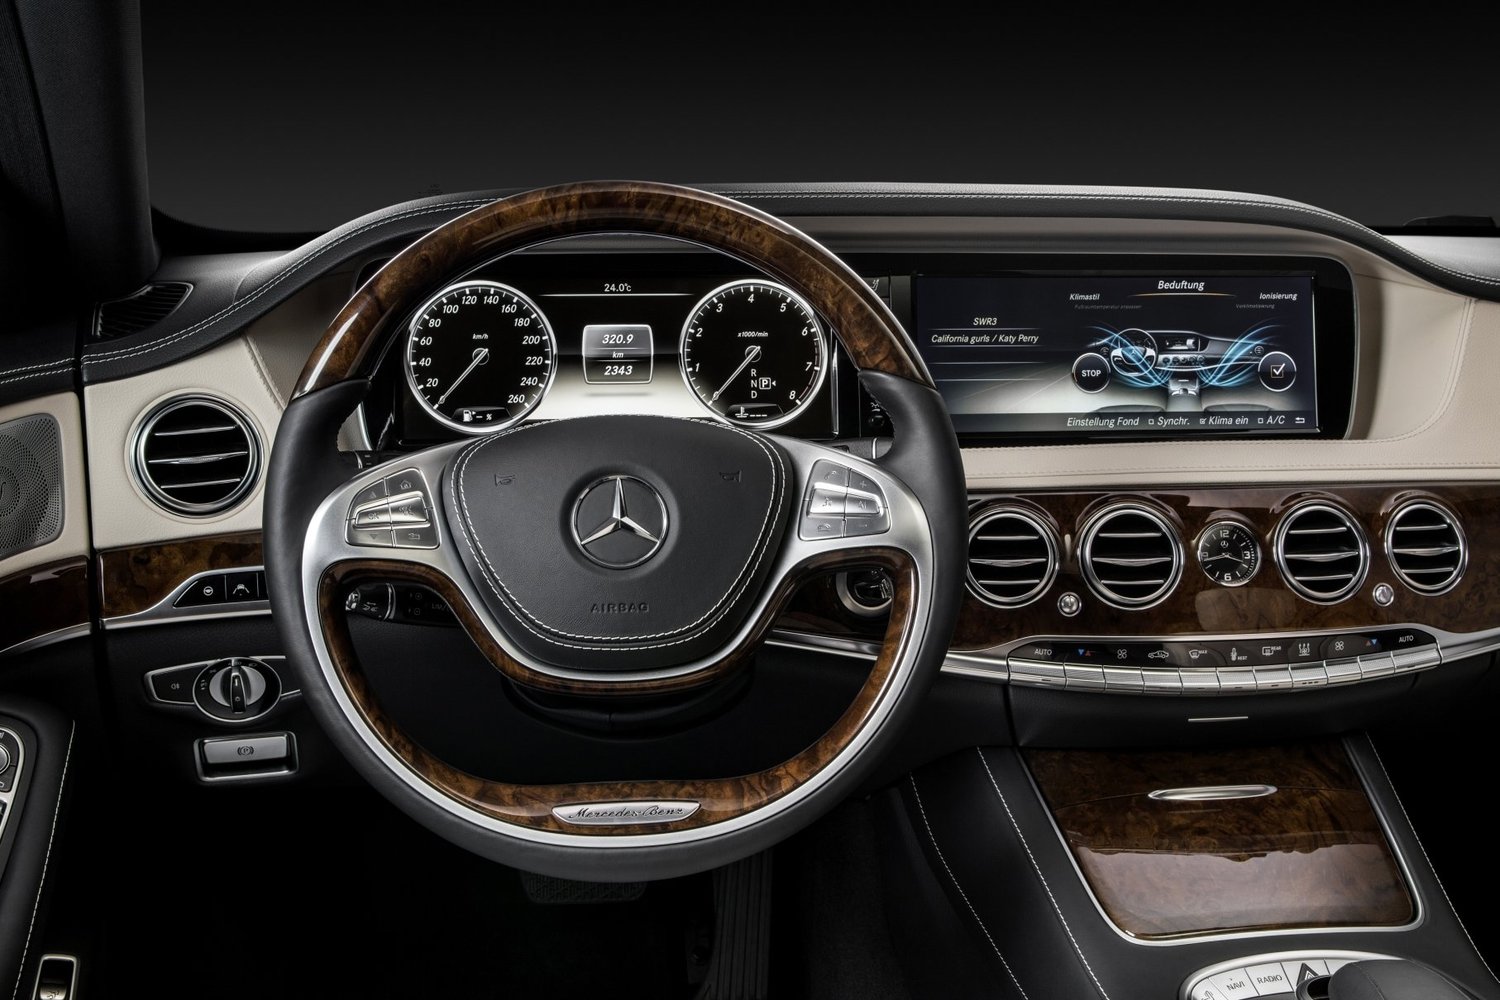 седан Long Mercedes-Benz S-klasse 2013 - 2016г выпуска модификация 2.1 AT (204 л.с.)